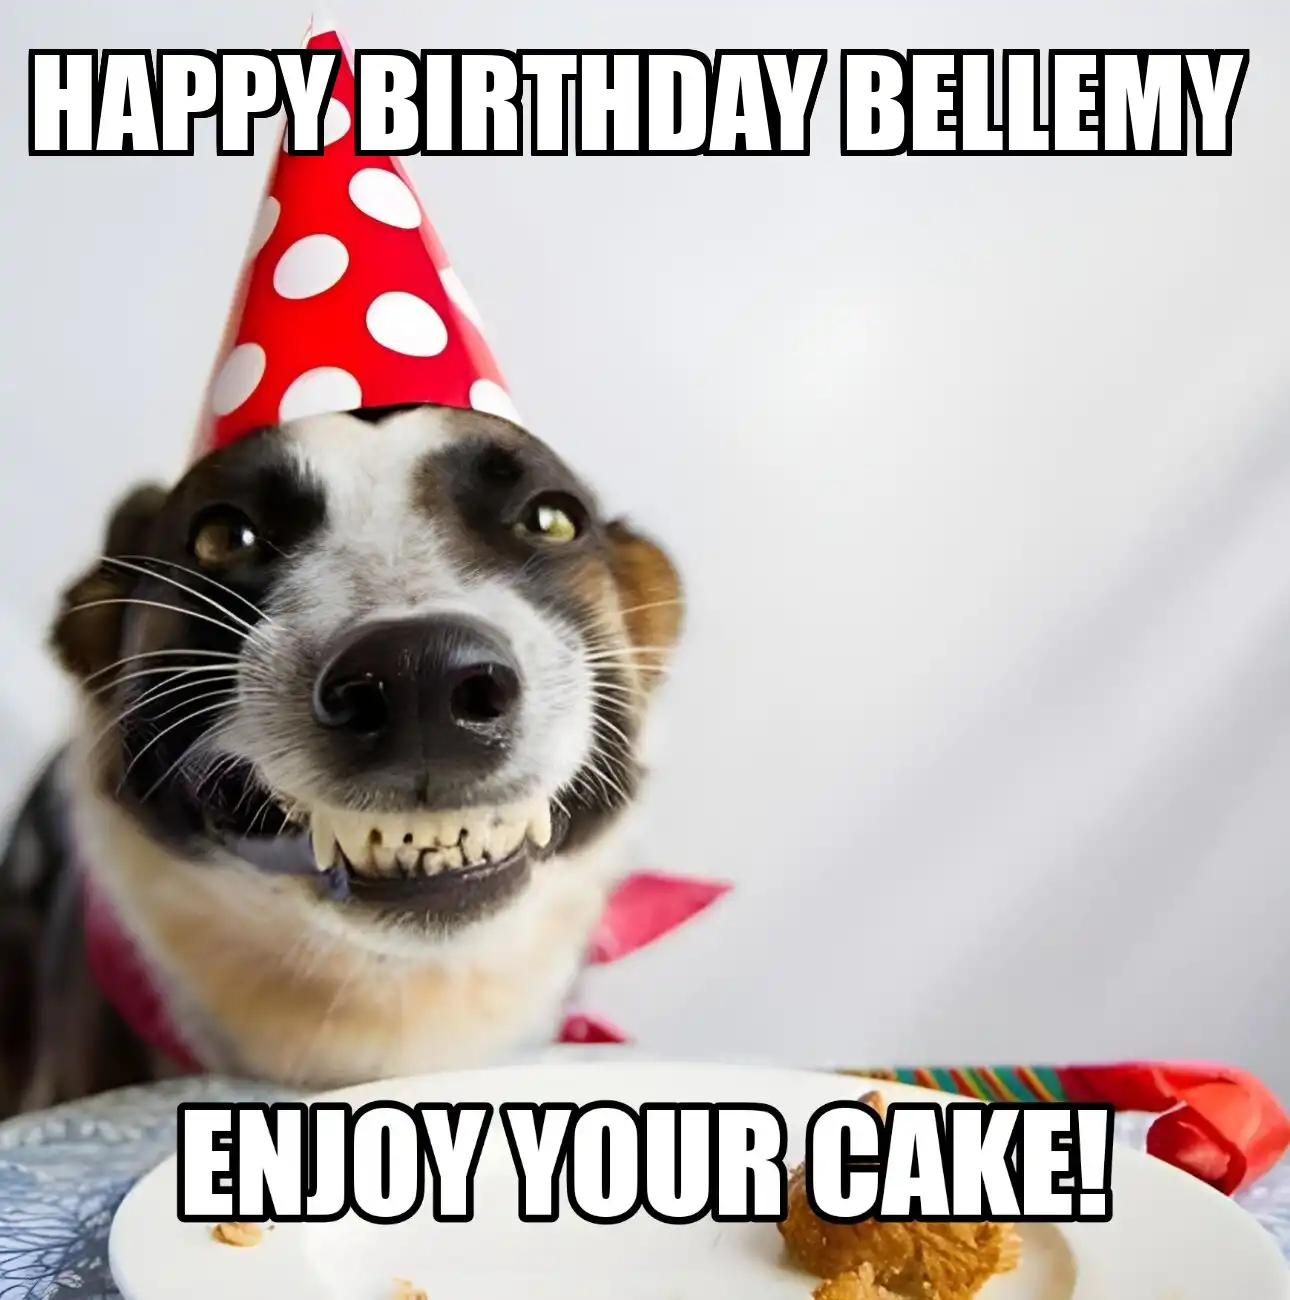 Happy Birthday Bellemy Enjoy Your Cake Dog Meme